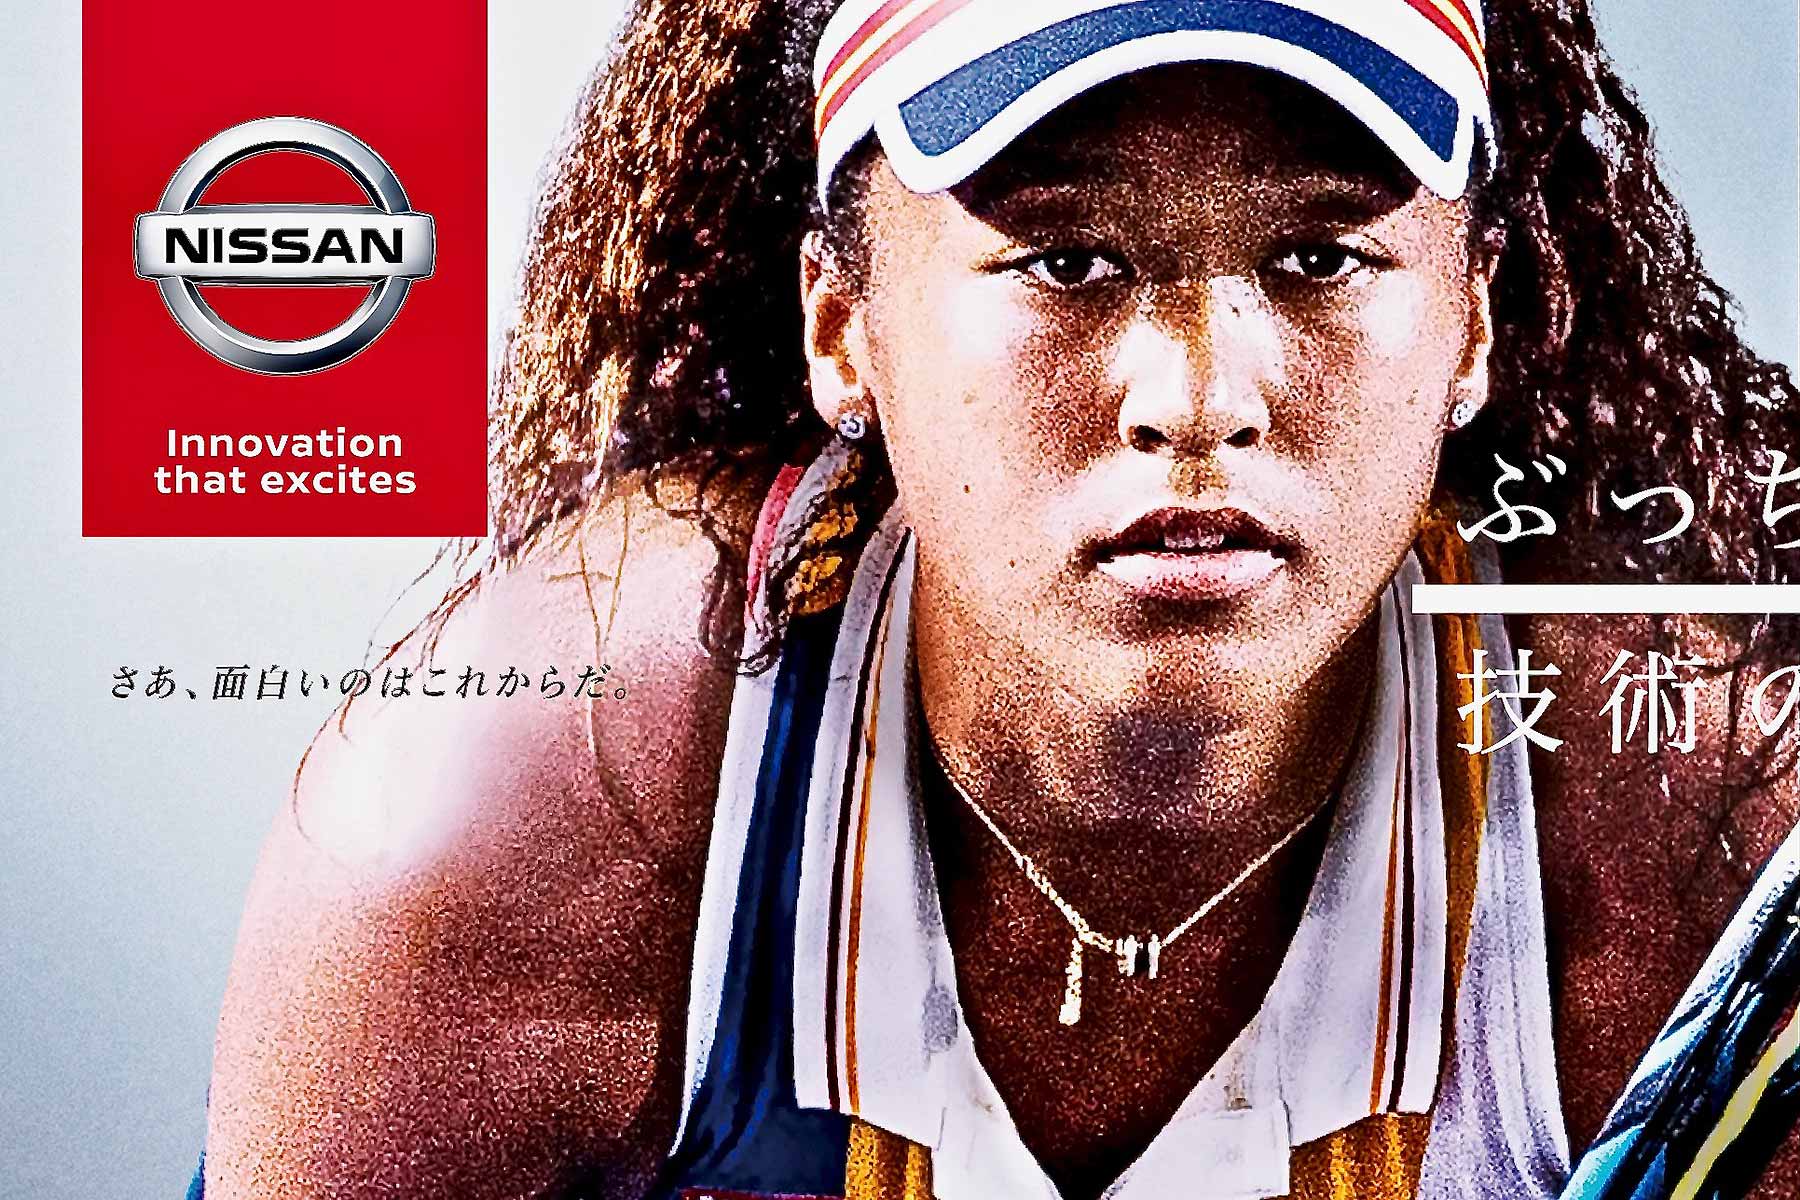 Grand Slam champion Naomi Osaka